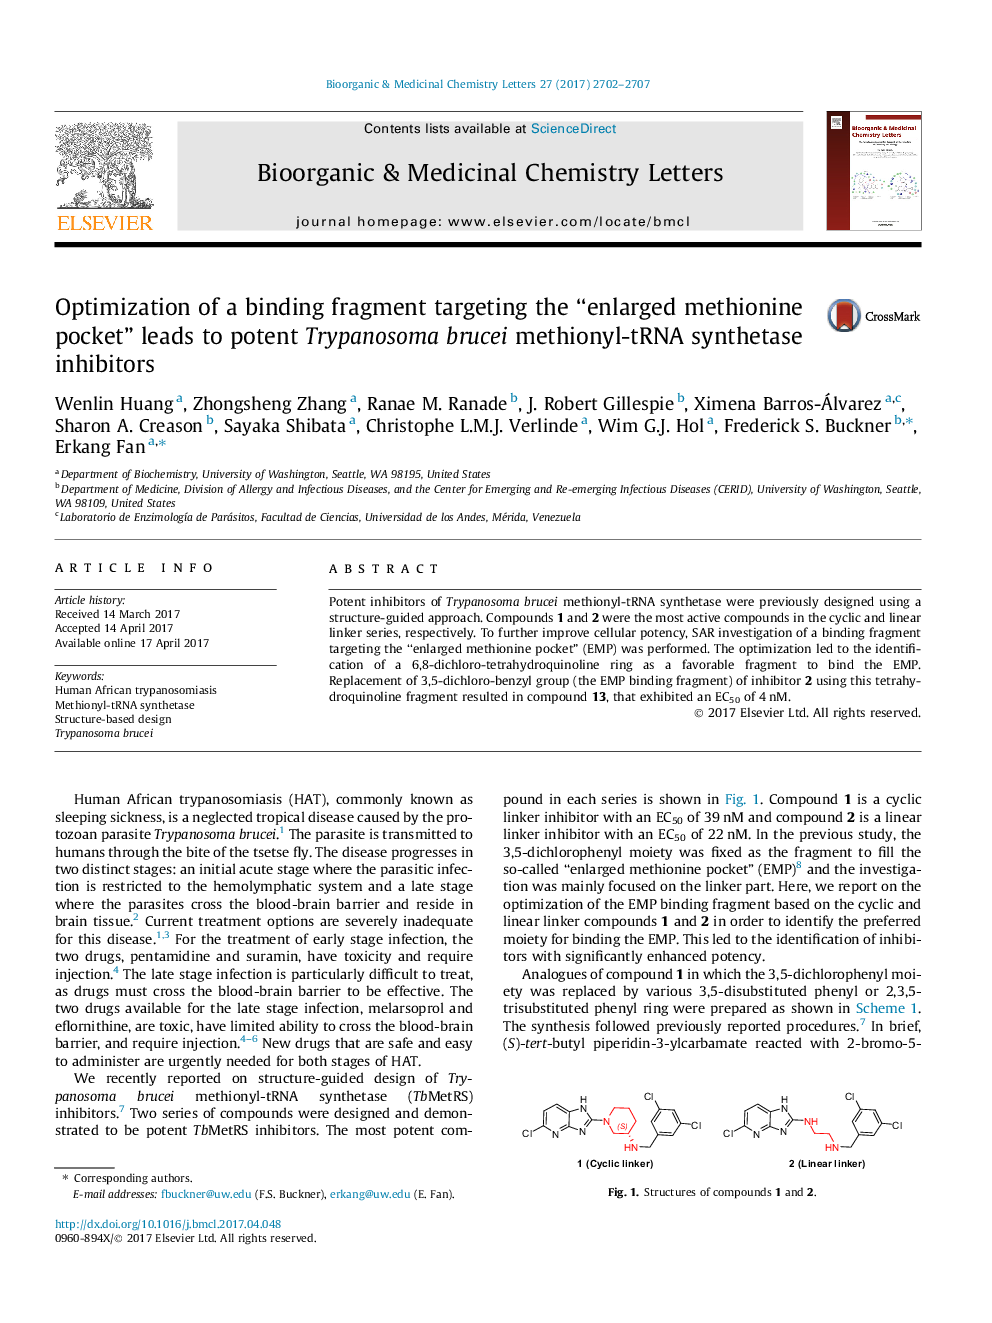 Optimization of a binding fragment targeting the “enlarged methionine pocket” leads to potent Trypanosoma brucei methionyl-tRNA synthetase inhibitors